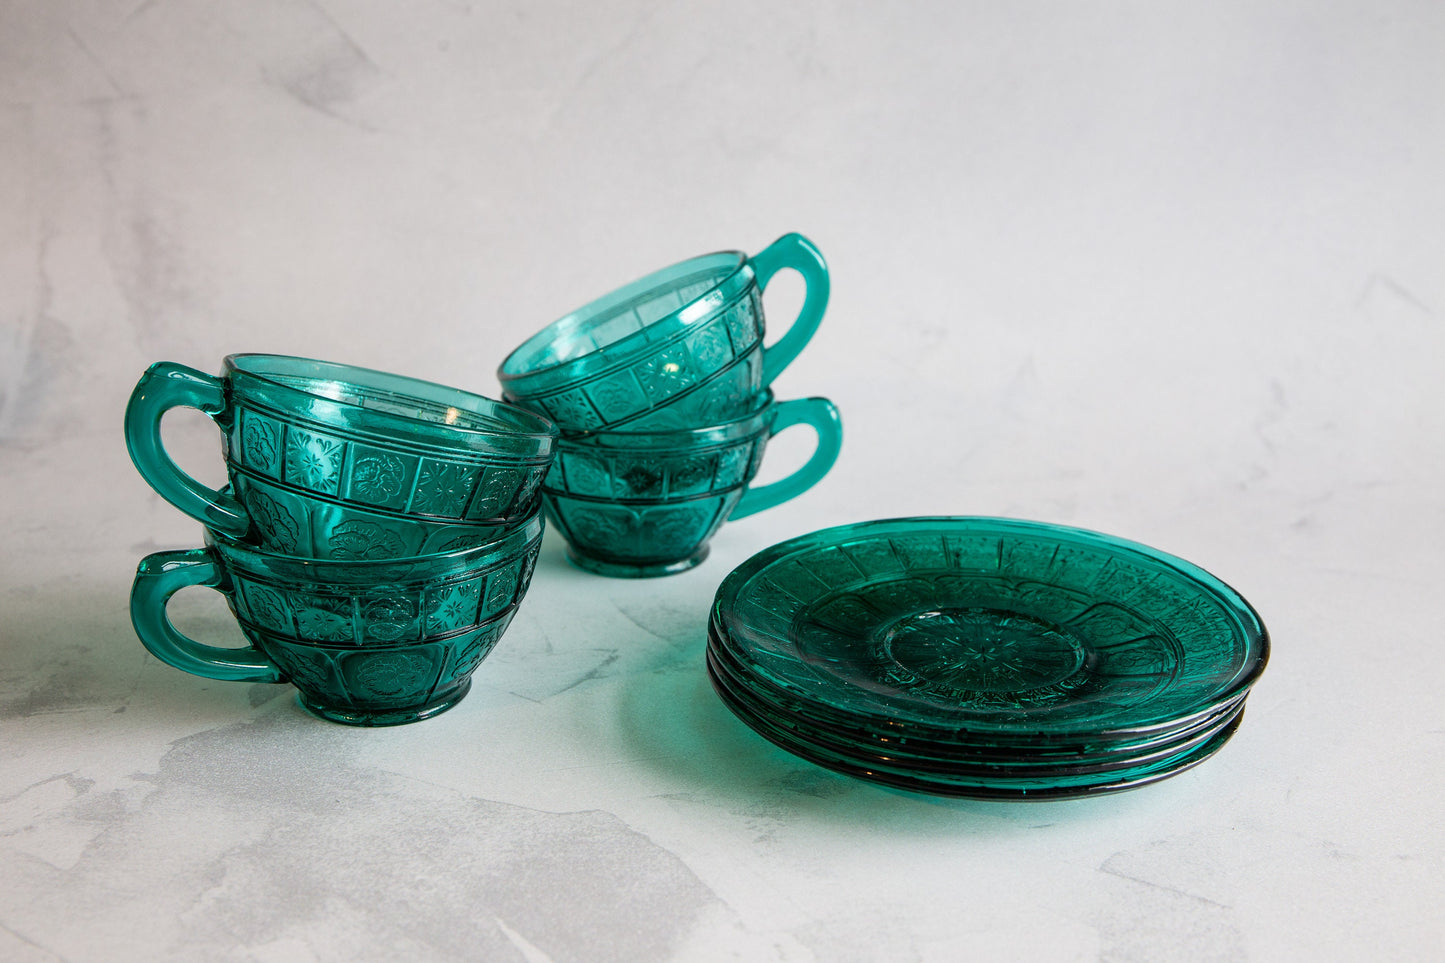 Vintage Jeannette Doric & Pansy Ultramarine Green/Blue Tea Cups Set